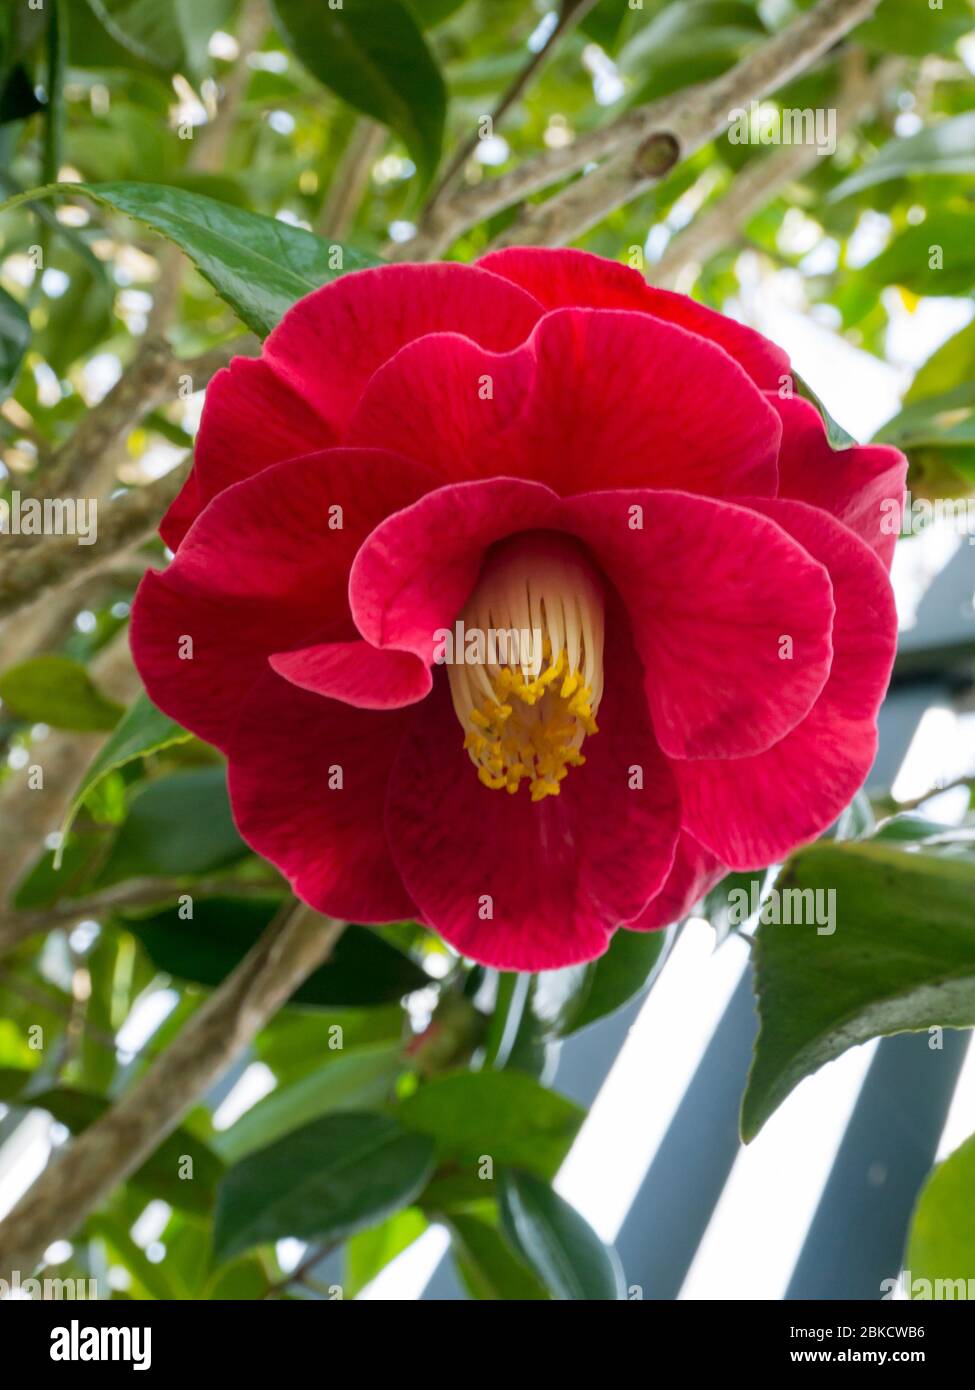 Red camellia semi-double form cultivar plant in the garden. Japanese tsubaki flower. Rose of winter. Stock Photo